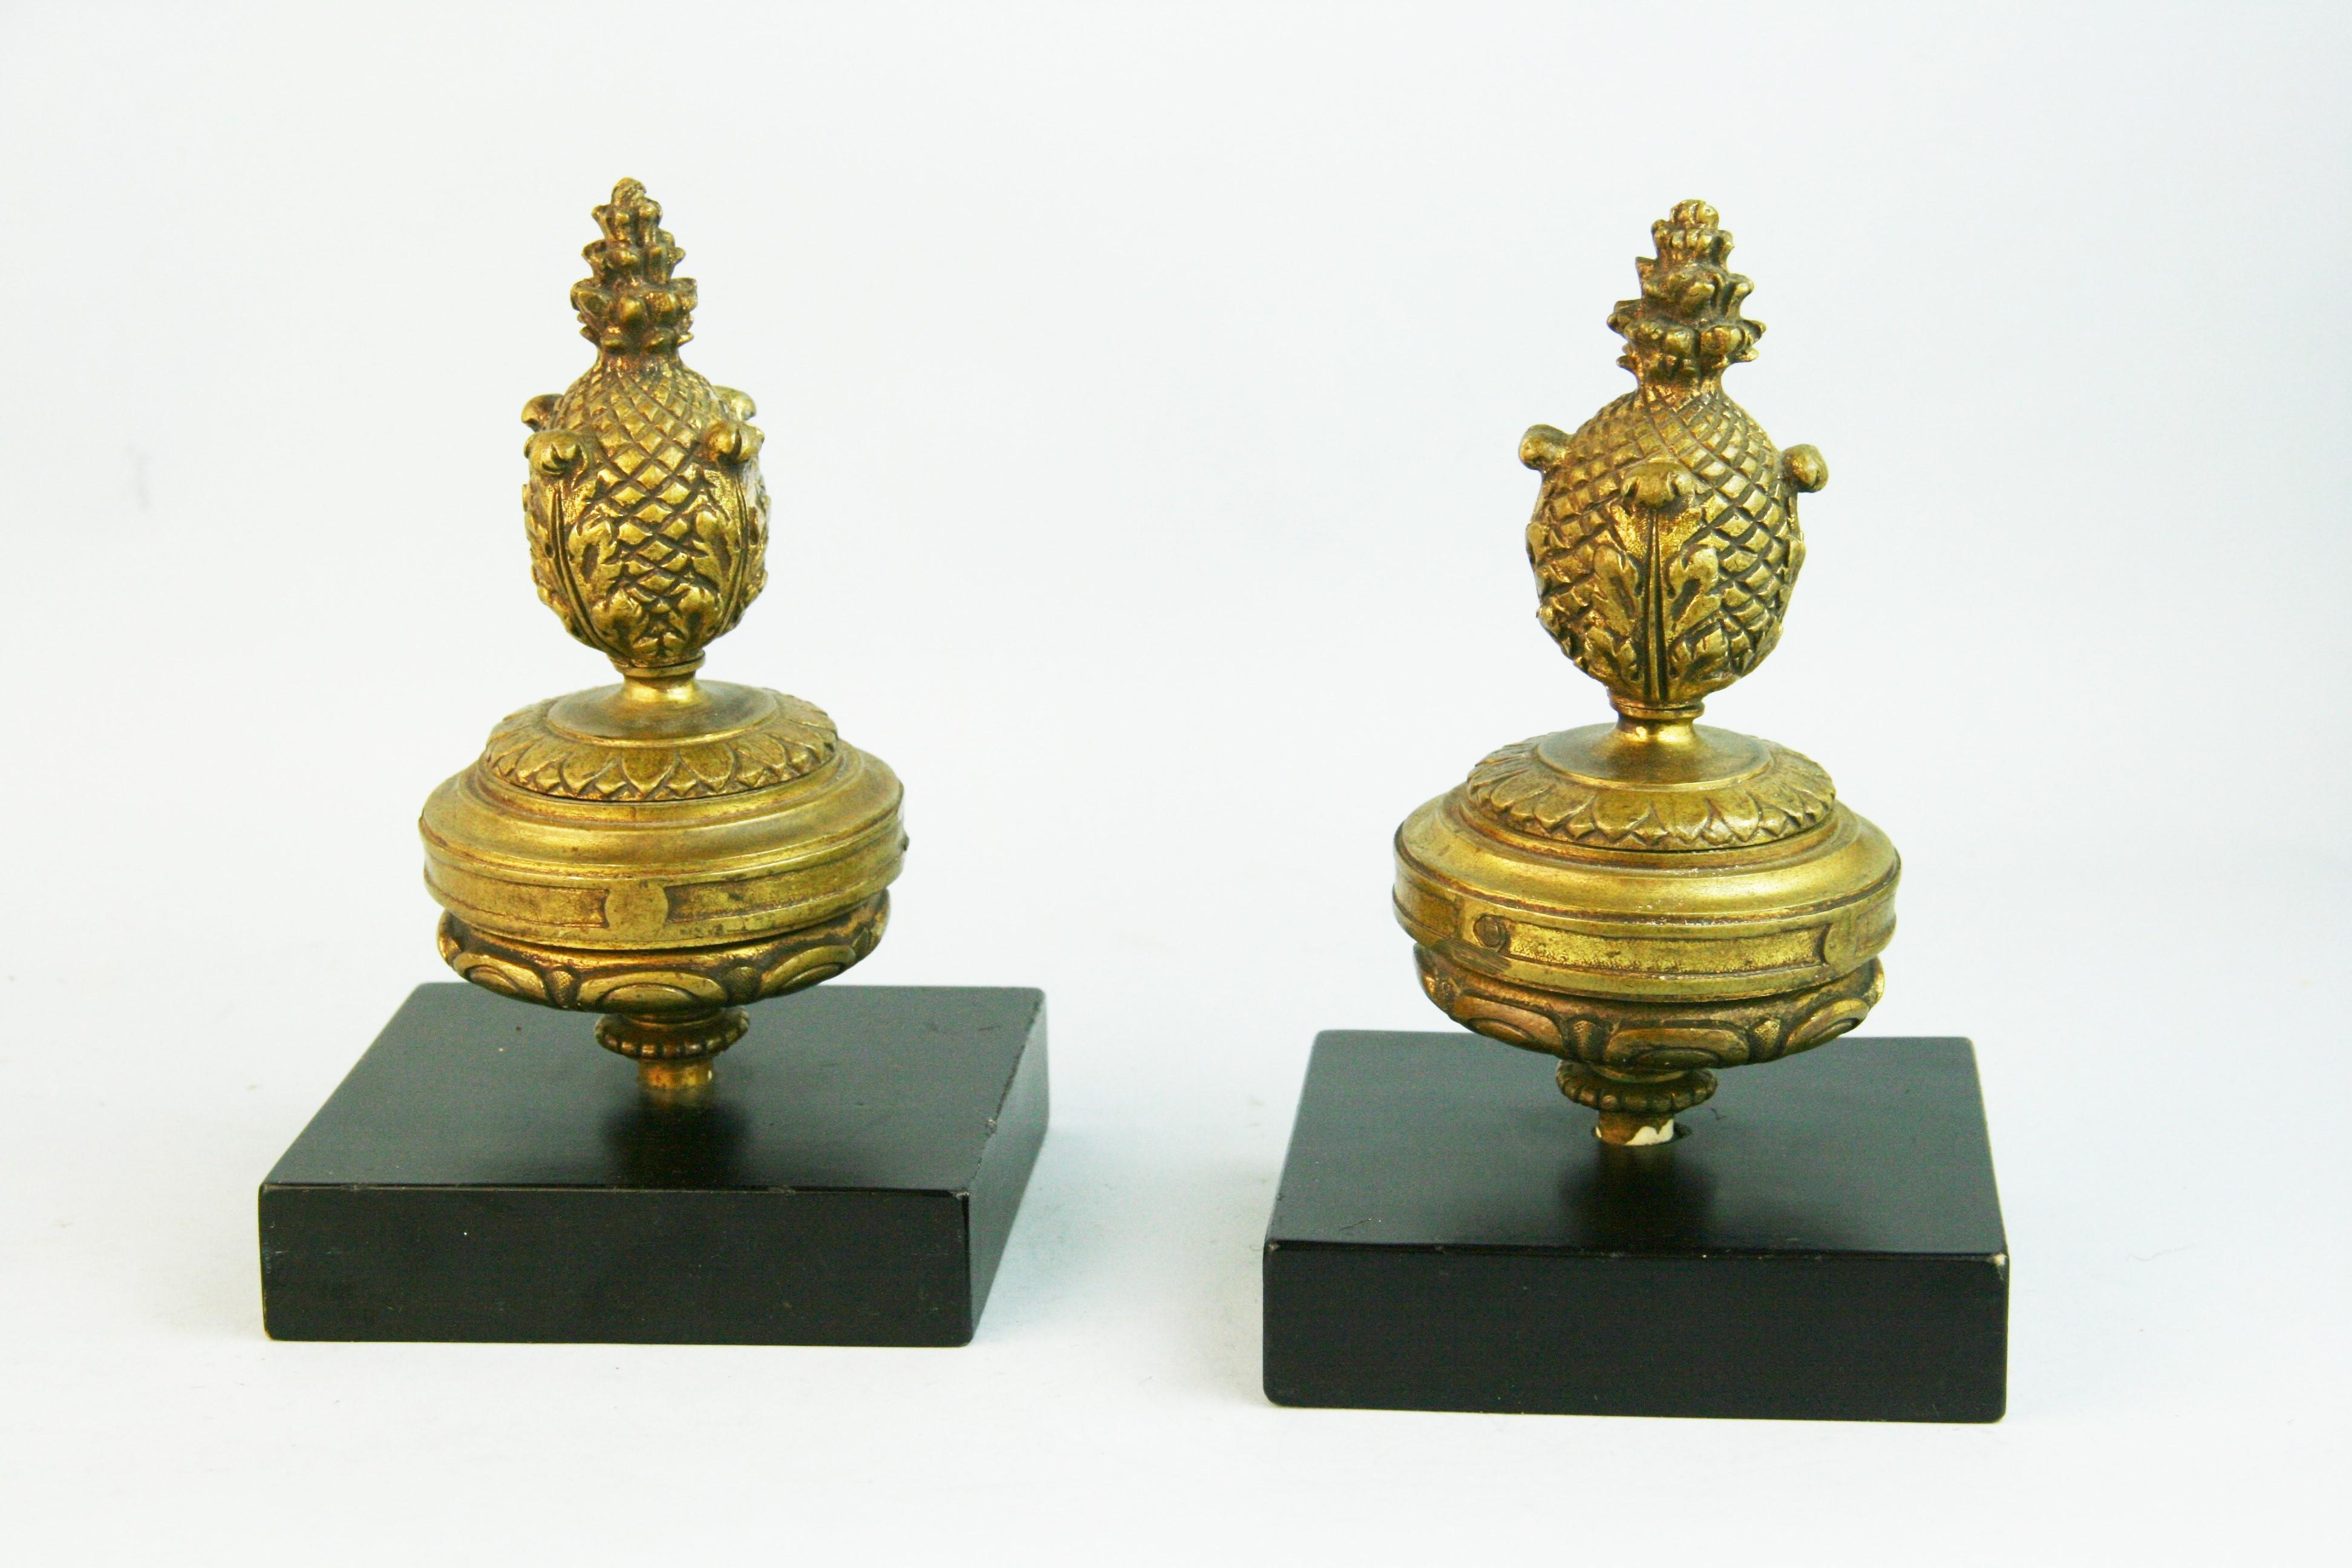 1192 Pair cast bronze finials bookends (1920's) later set on a wood block.
Finials 3.25